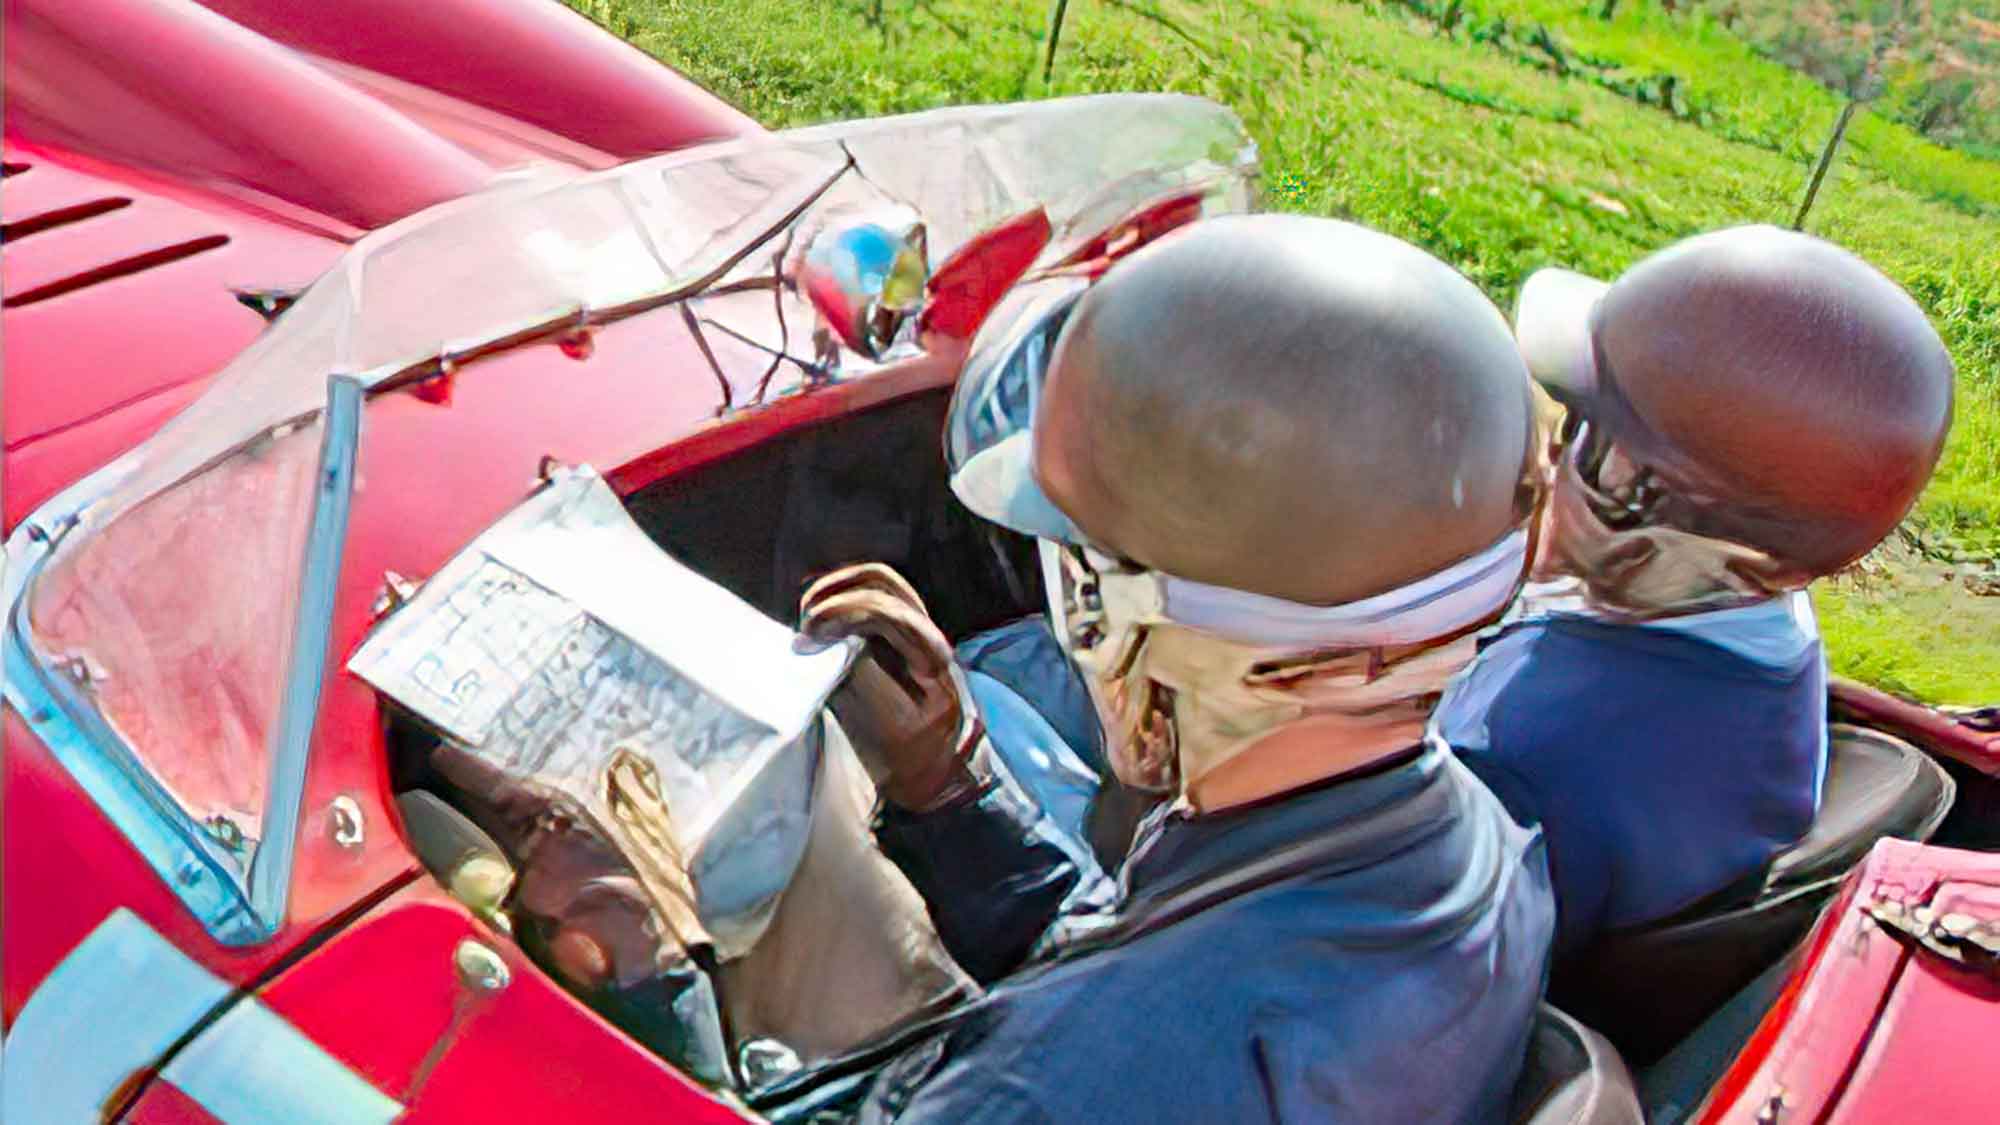 Windform brilliert als Fertigungsmaterial in Michael Manns aktuellem Film »Ferrari«